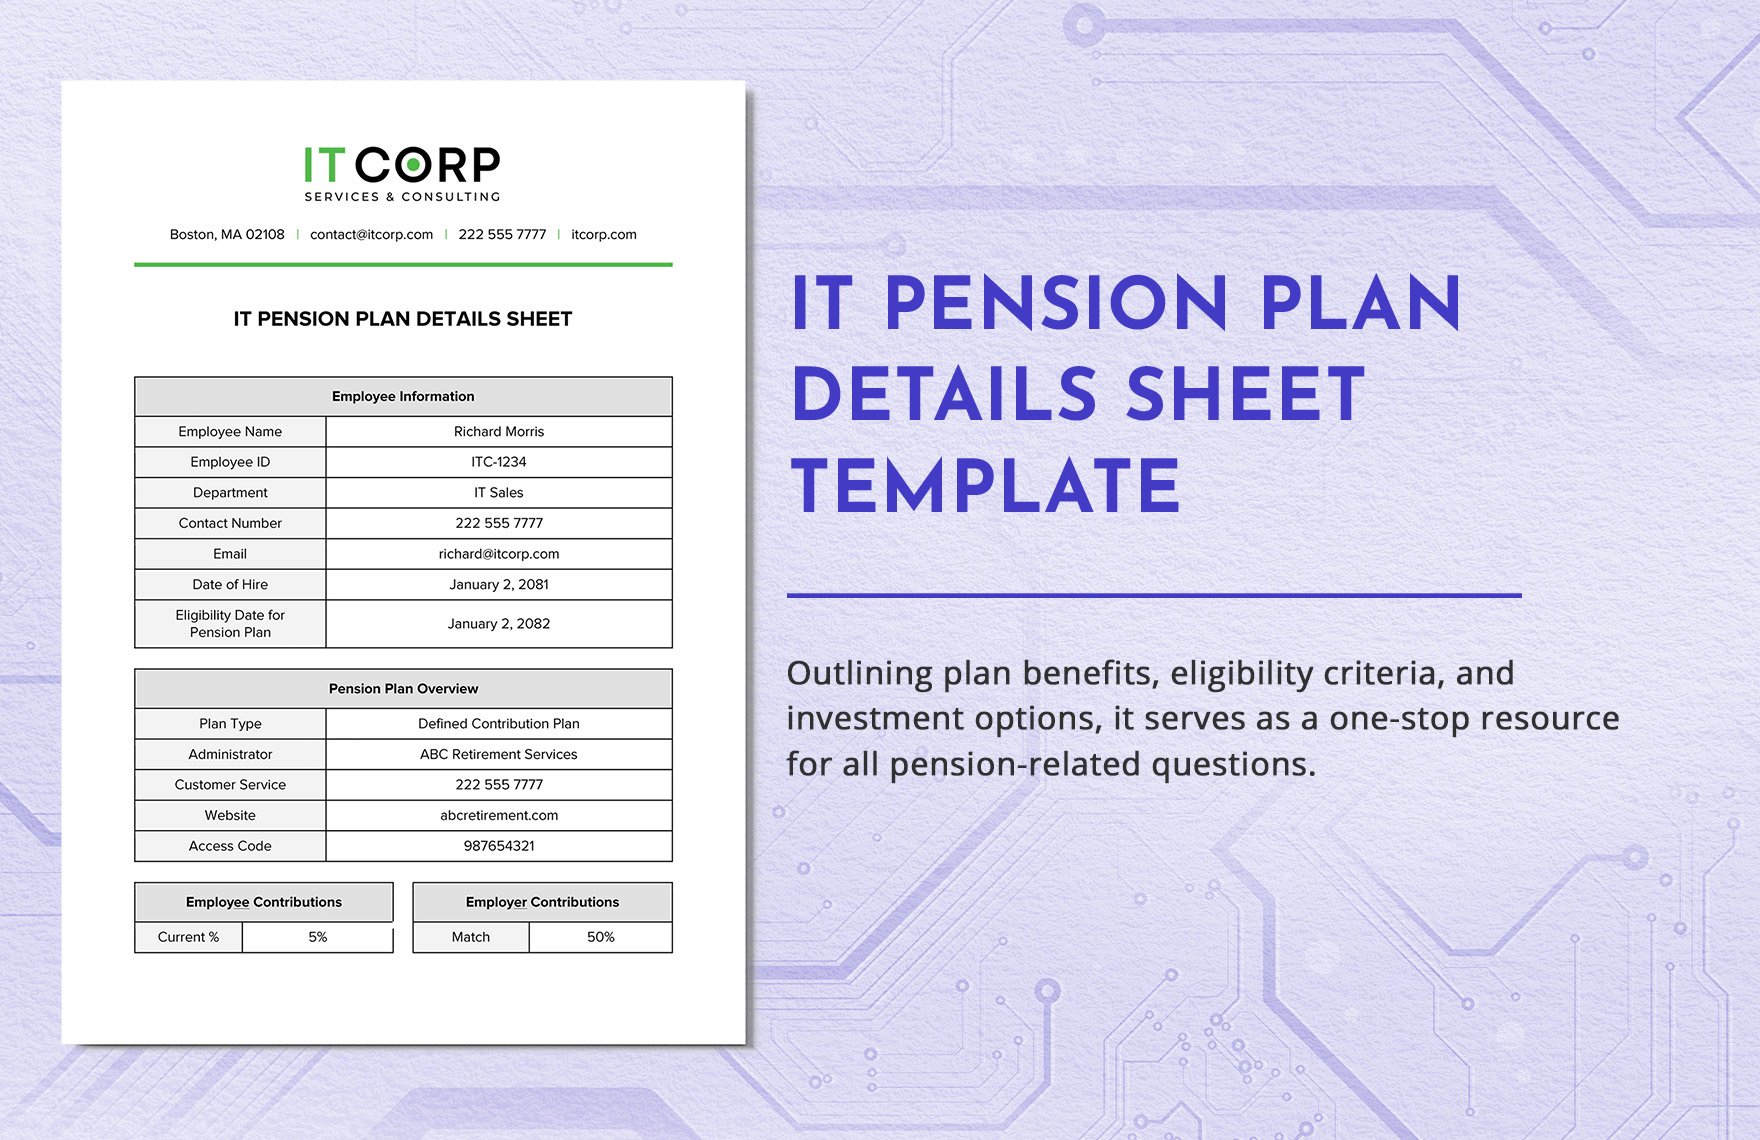 IT Pension Plan Details Sheet Template in Word, Google Docs, PDF